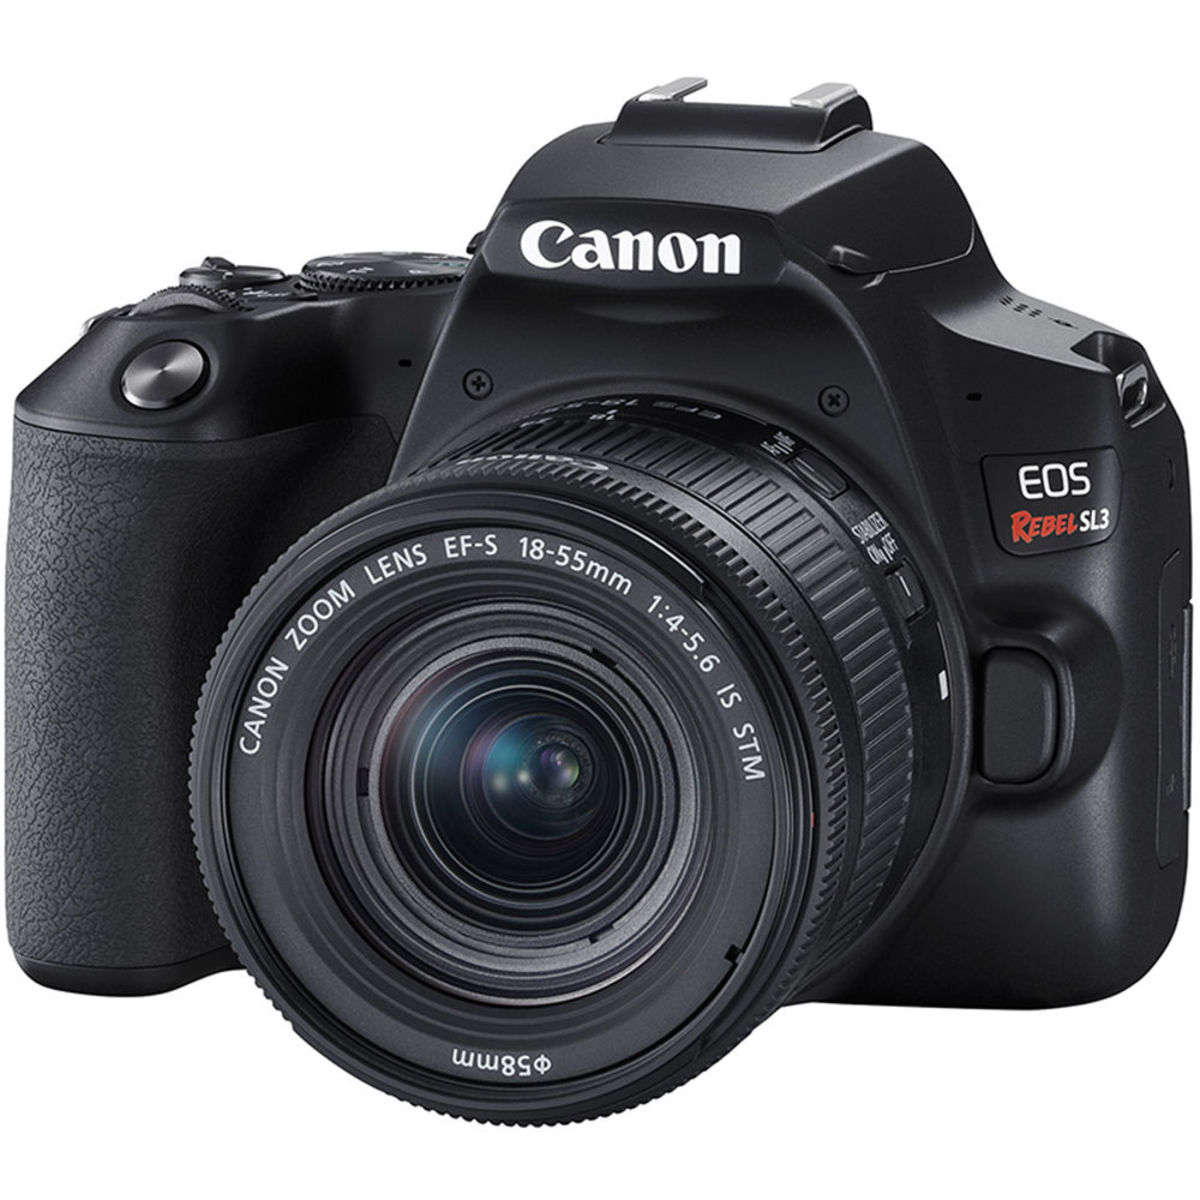 Best Canon Digital Cameras in 2021